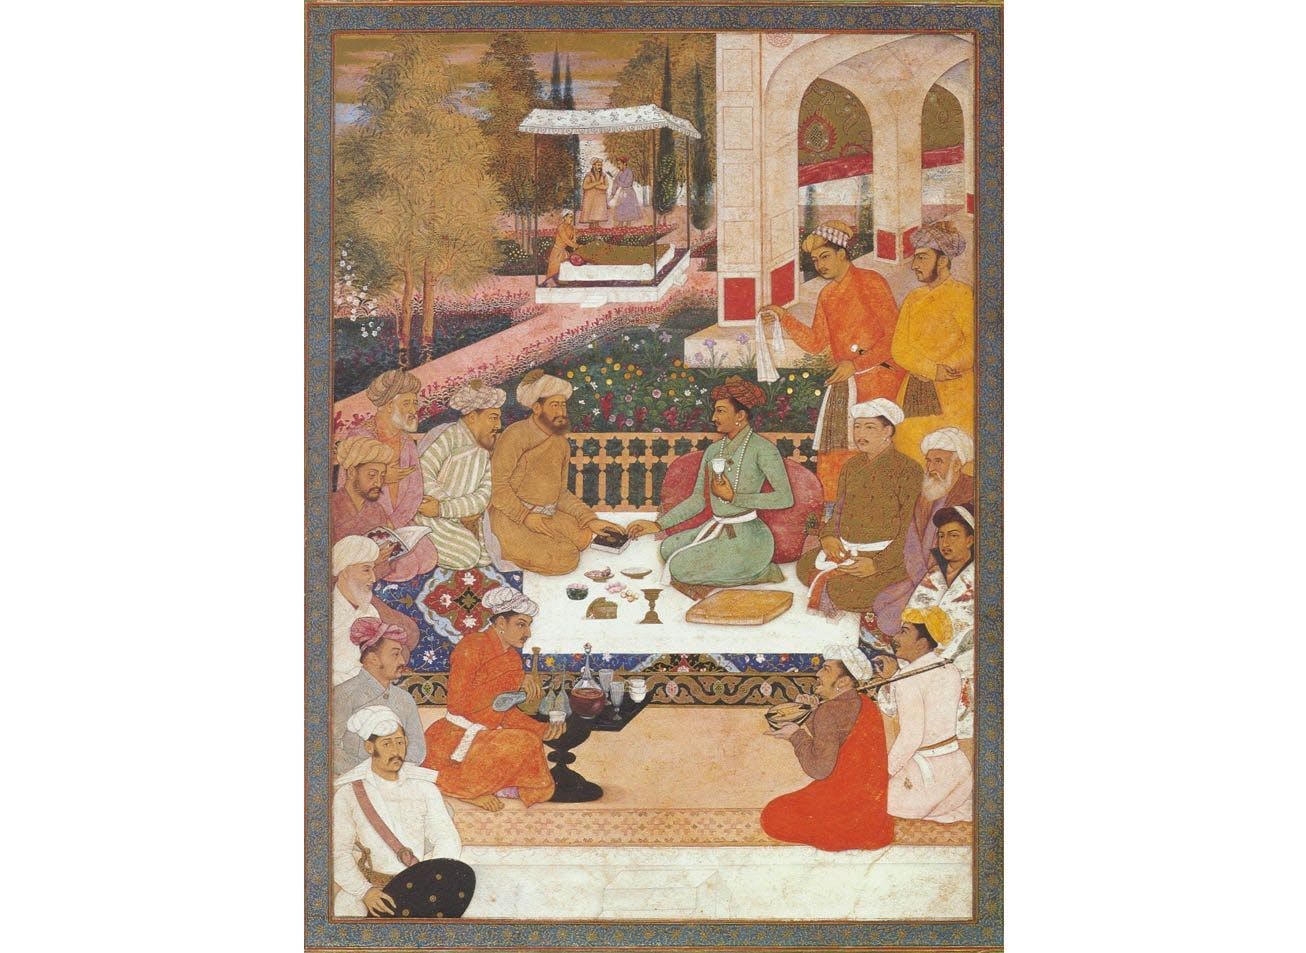 Dara Shukoh with philosophers, painted by Bichitr